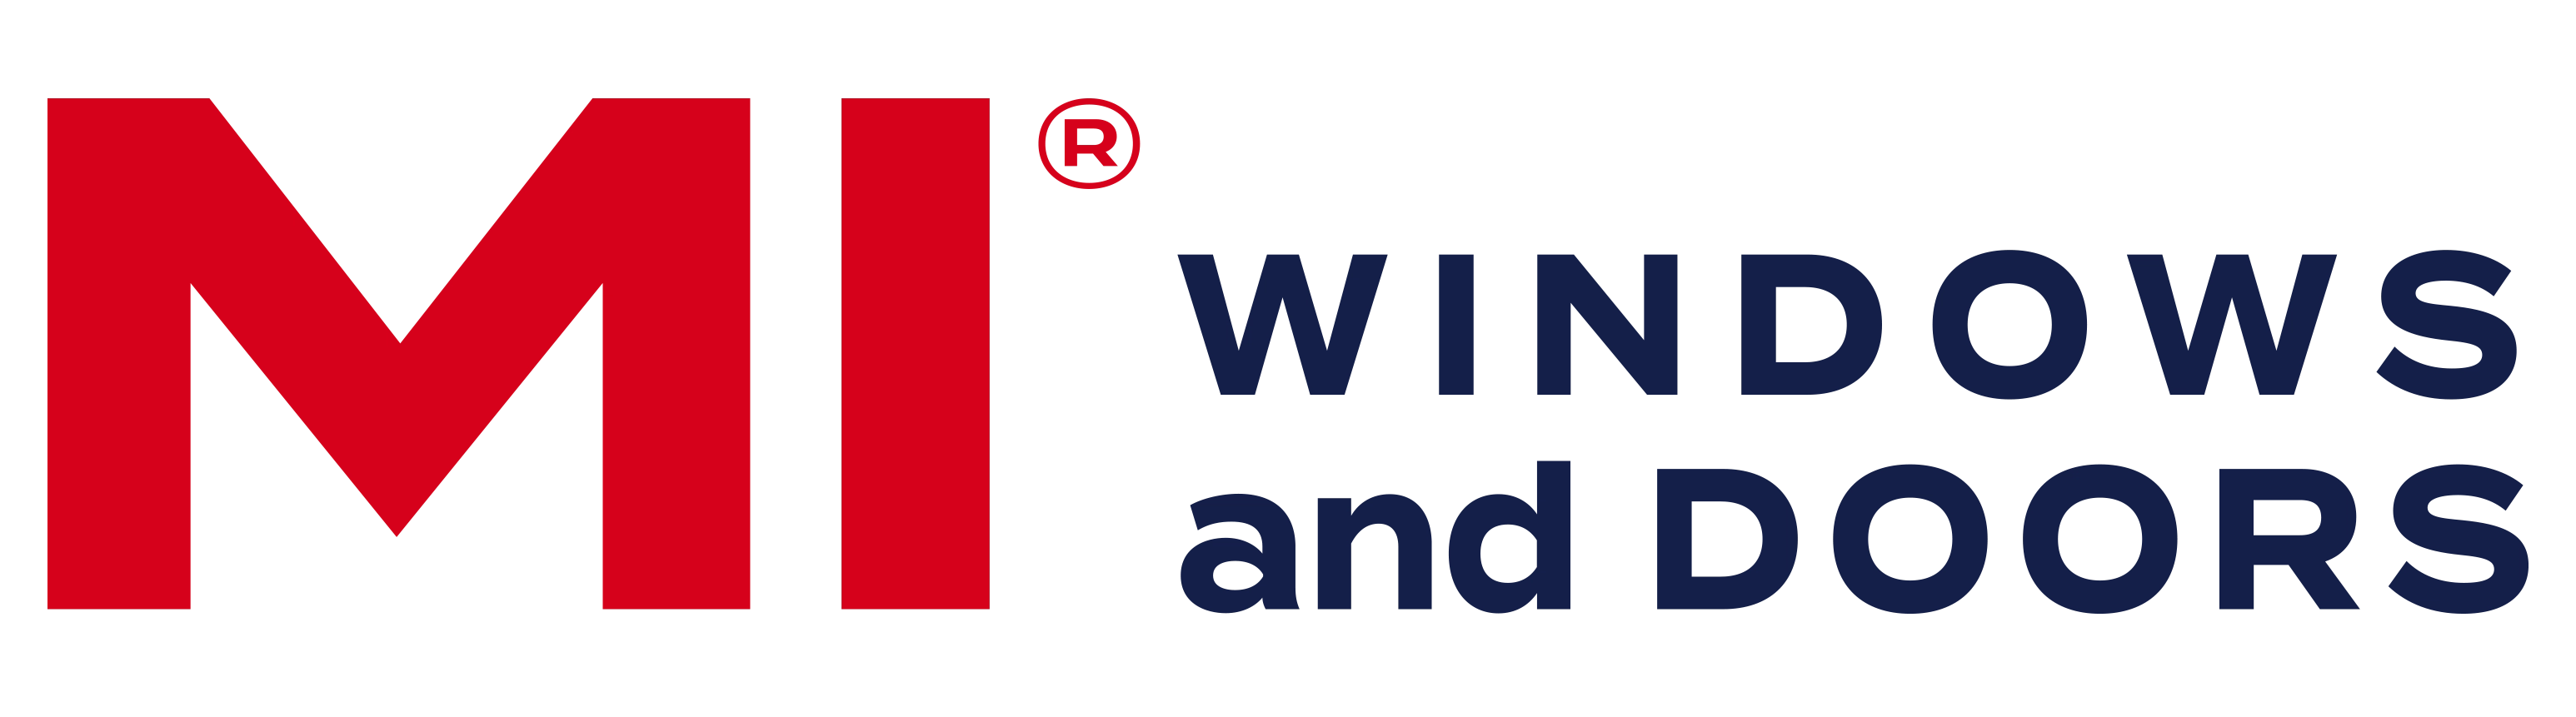 Sunrise Windows, Ltd. Logo